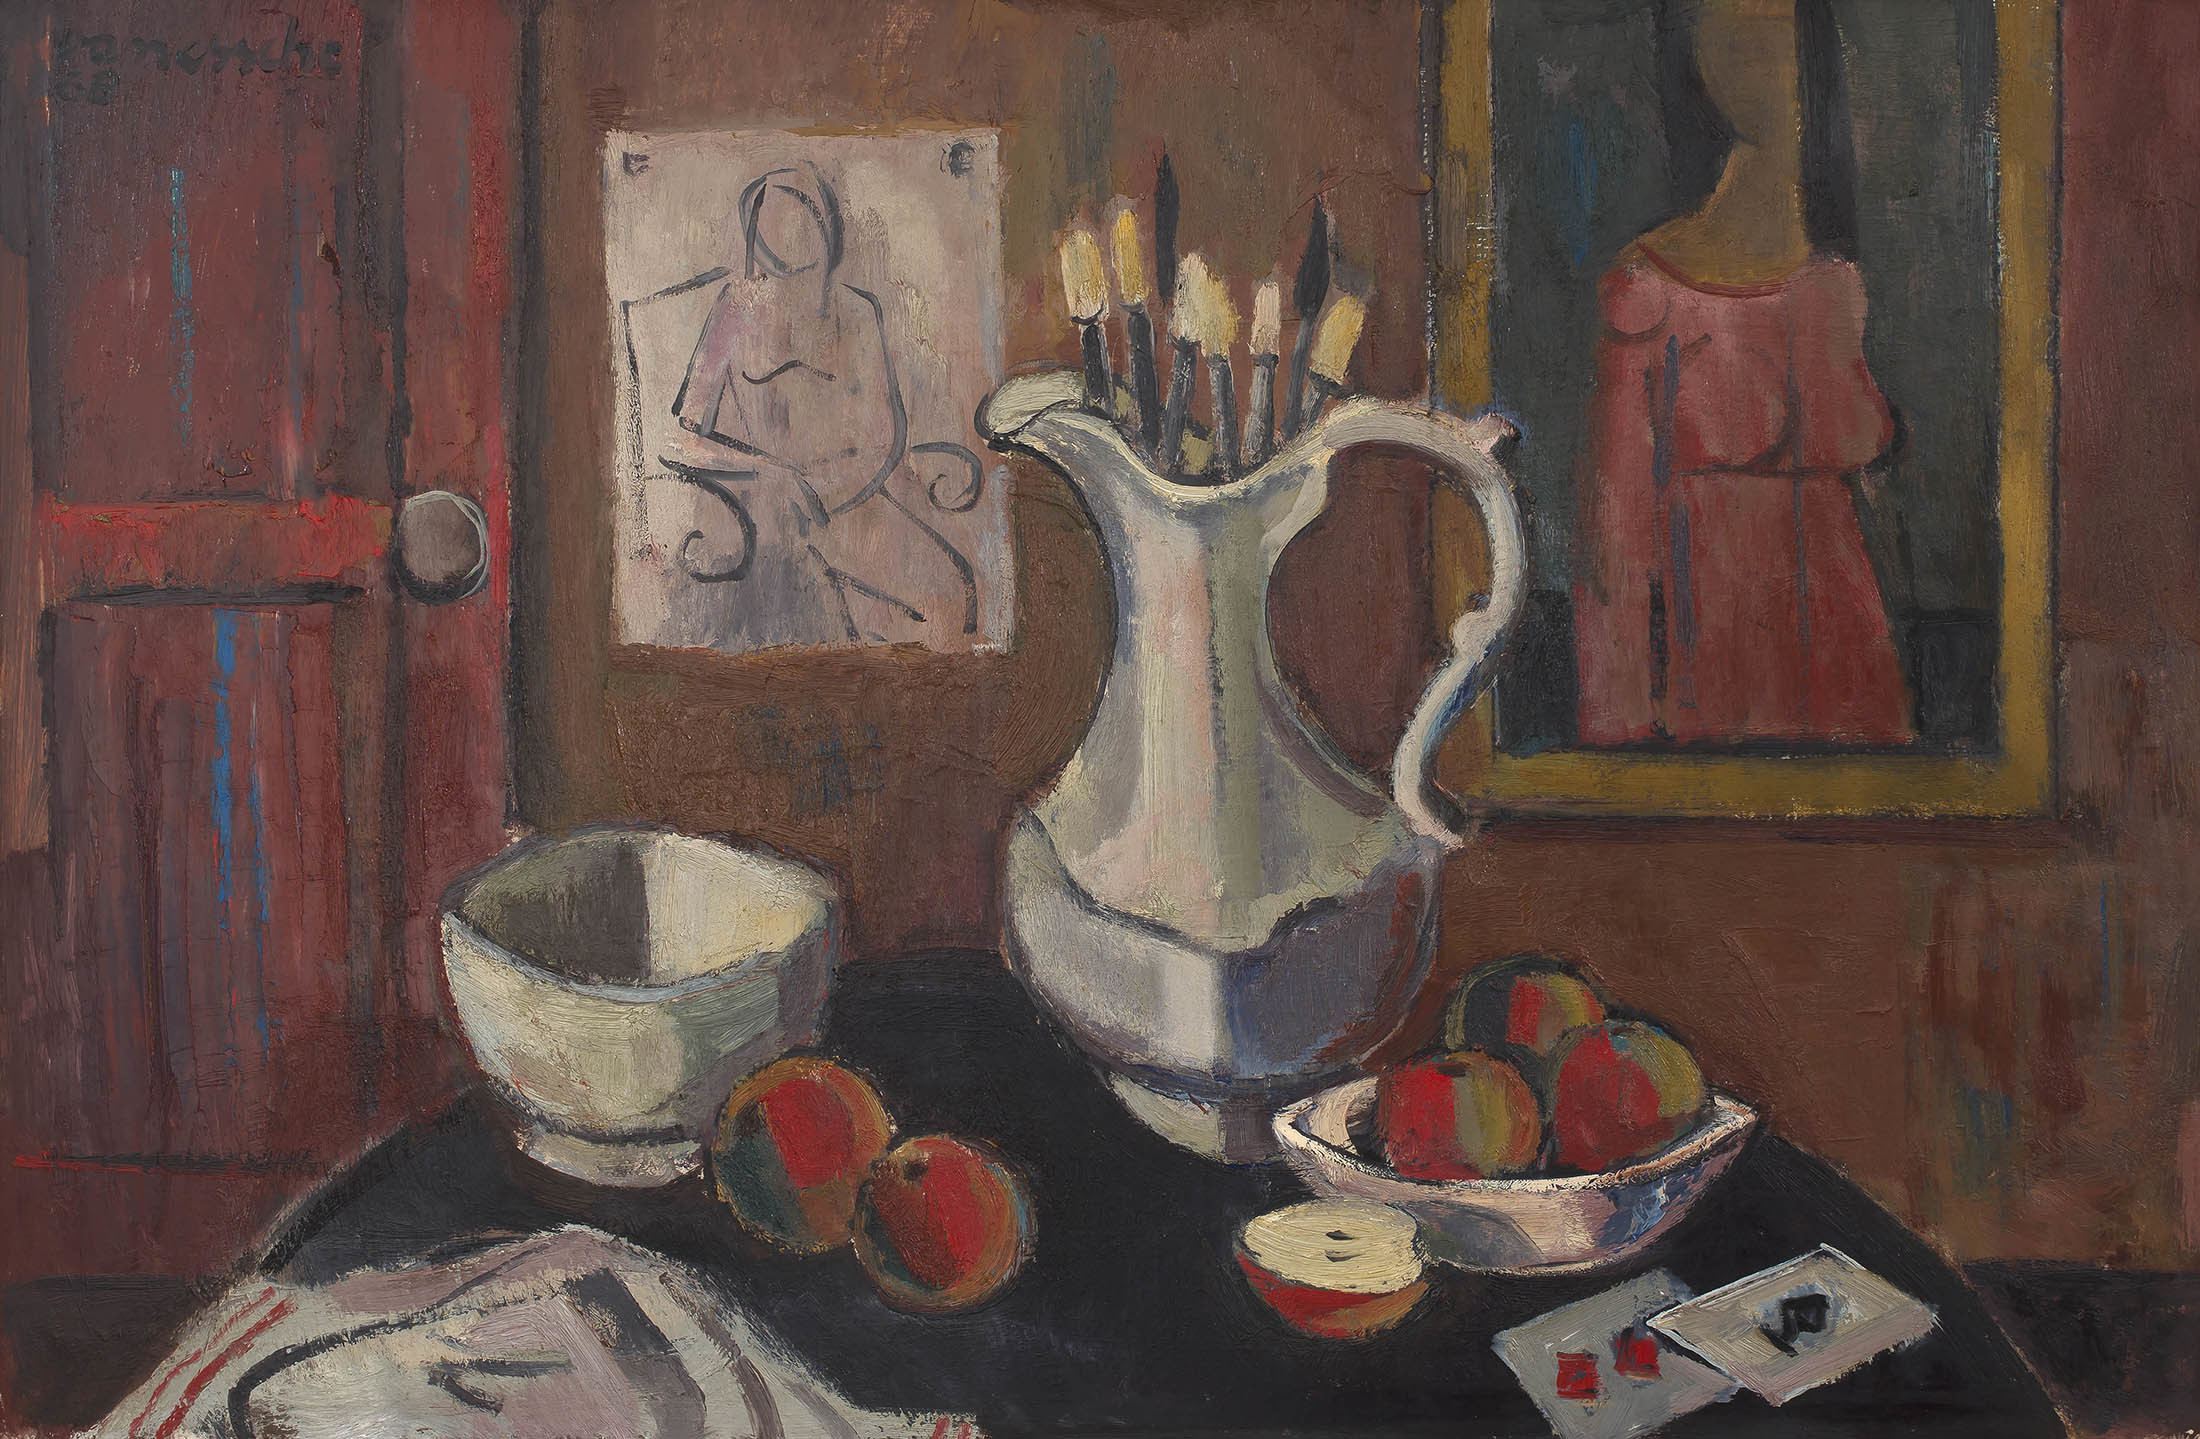 Maurice van Essche; Still Life in the Artist's Studio